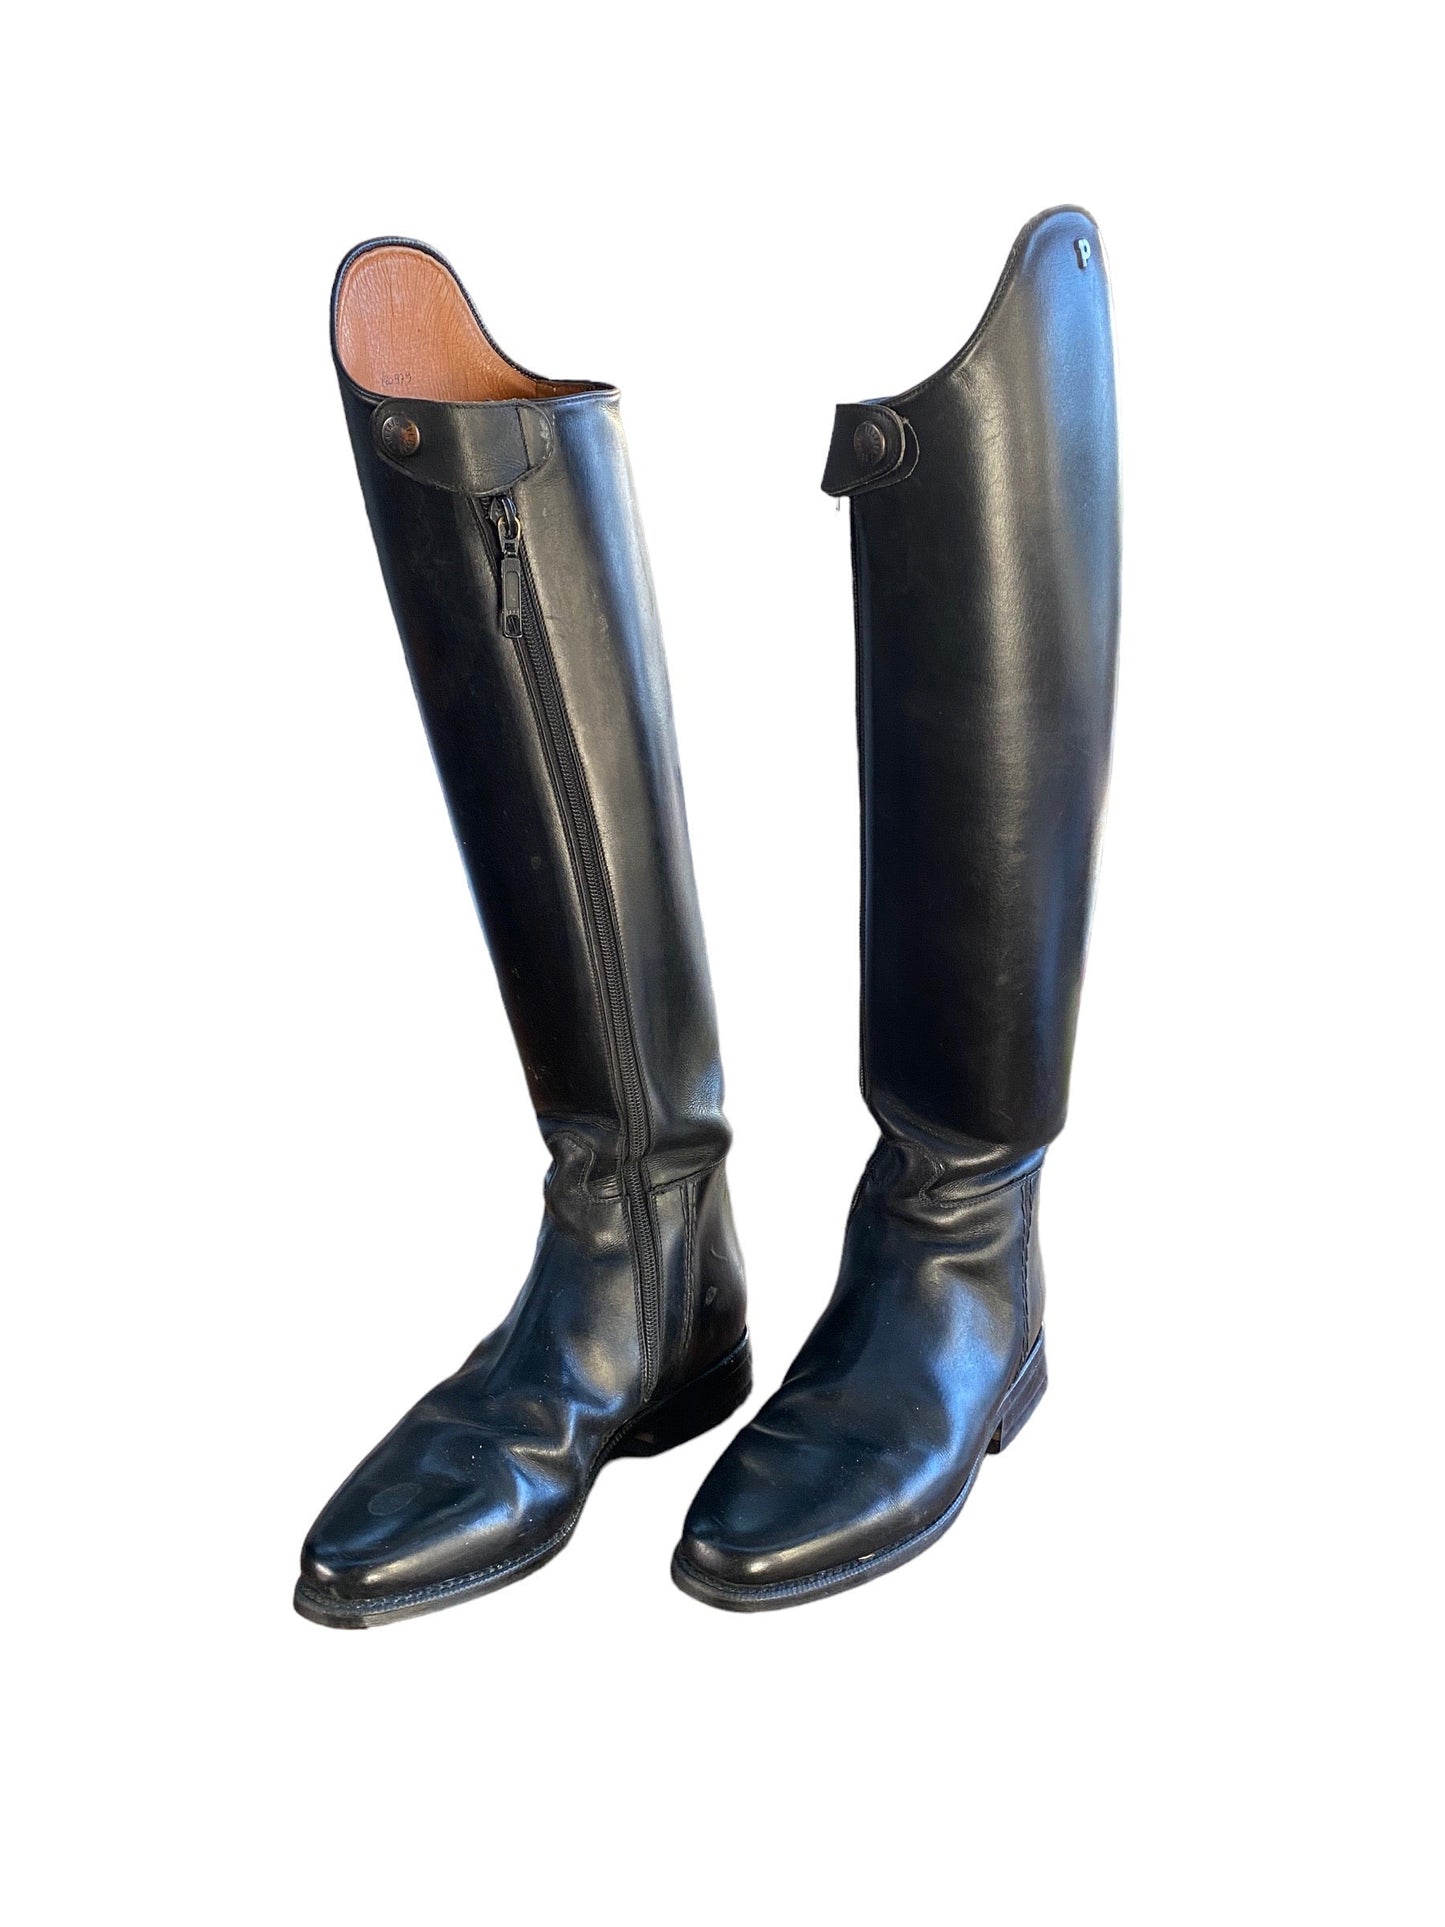 Petrie Top Boots LADIES 7.5 Black (234514)